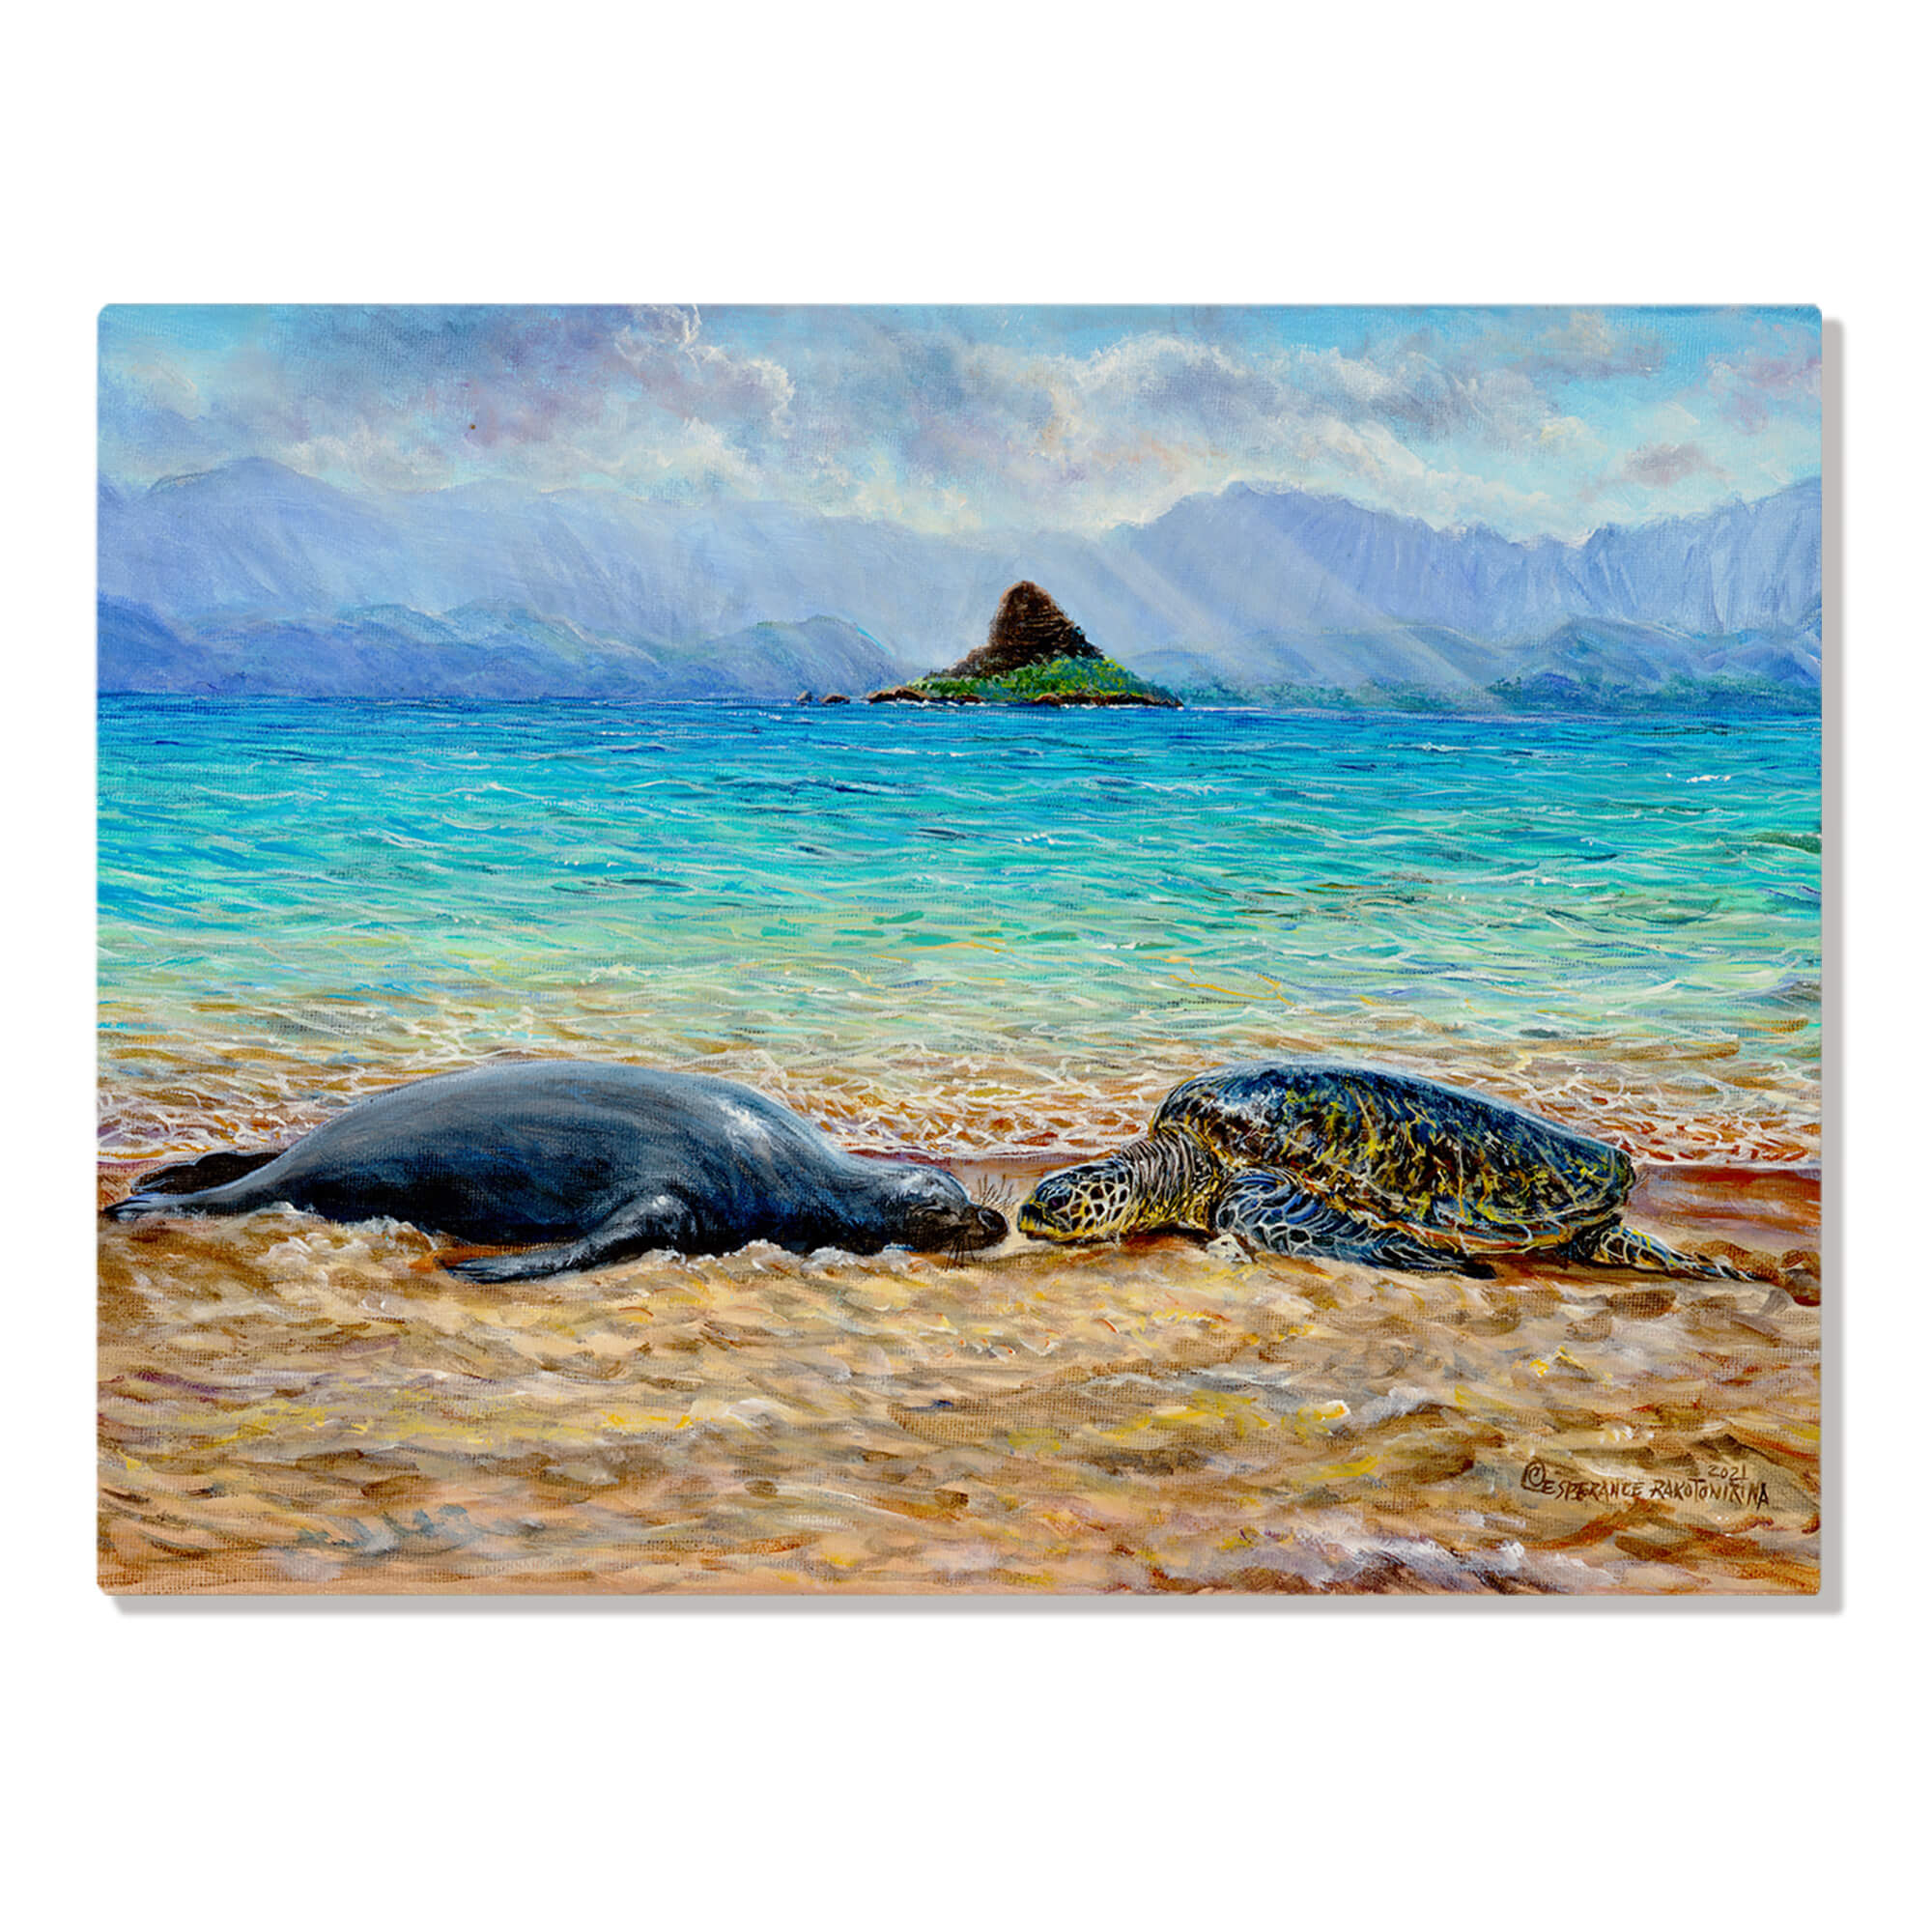 Metal print showcasing a seal and a turtle resting on the shore by hawaii artist EsperanceRakotonirina